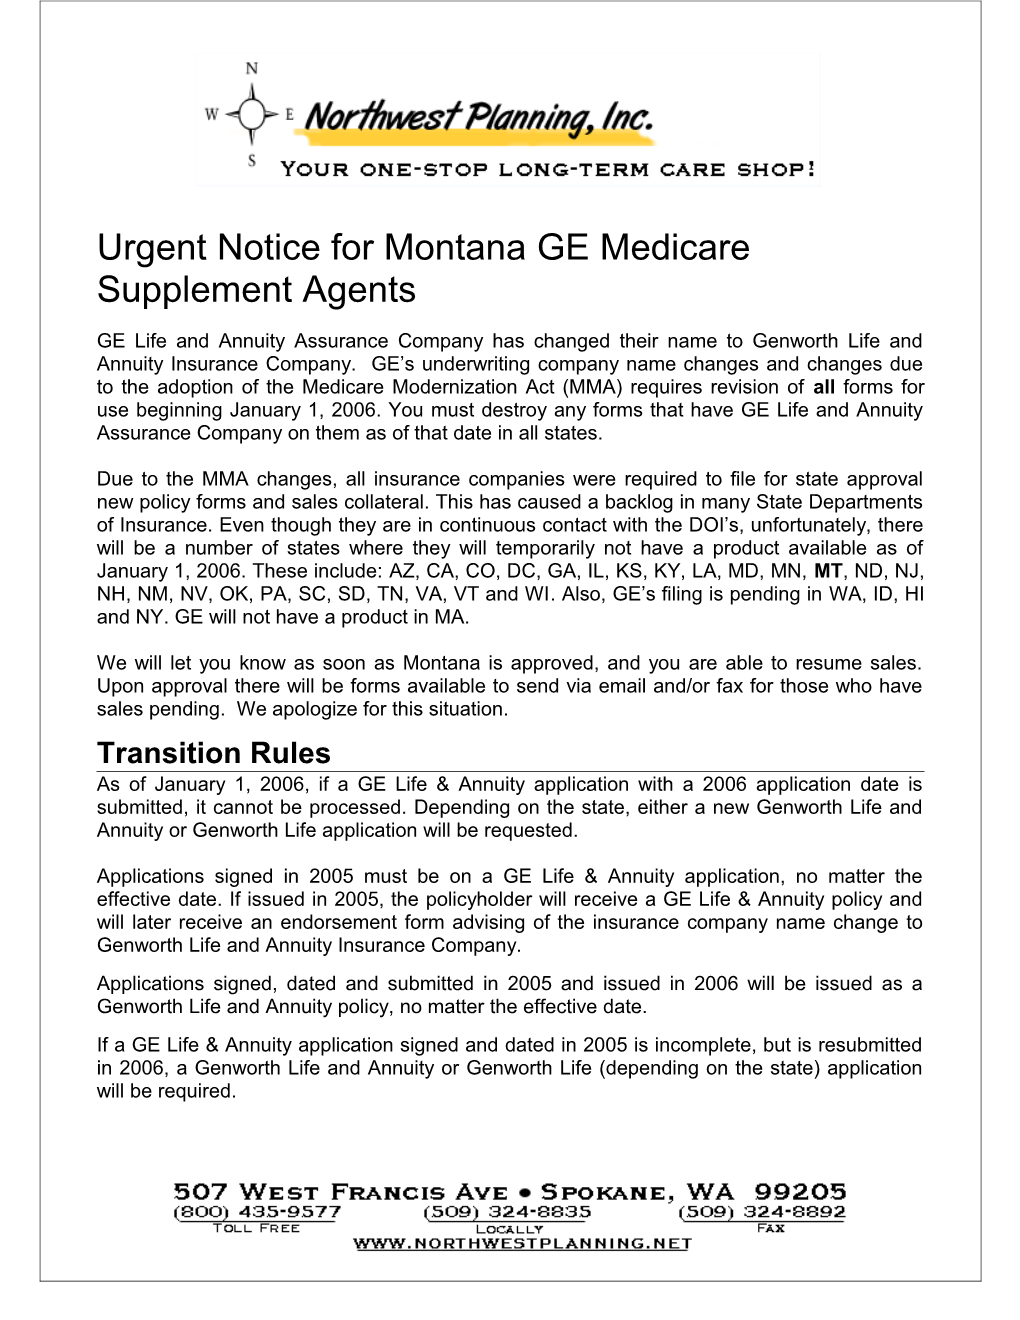 Urgent Notice for Montana GE Medicare Supplement Agents